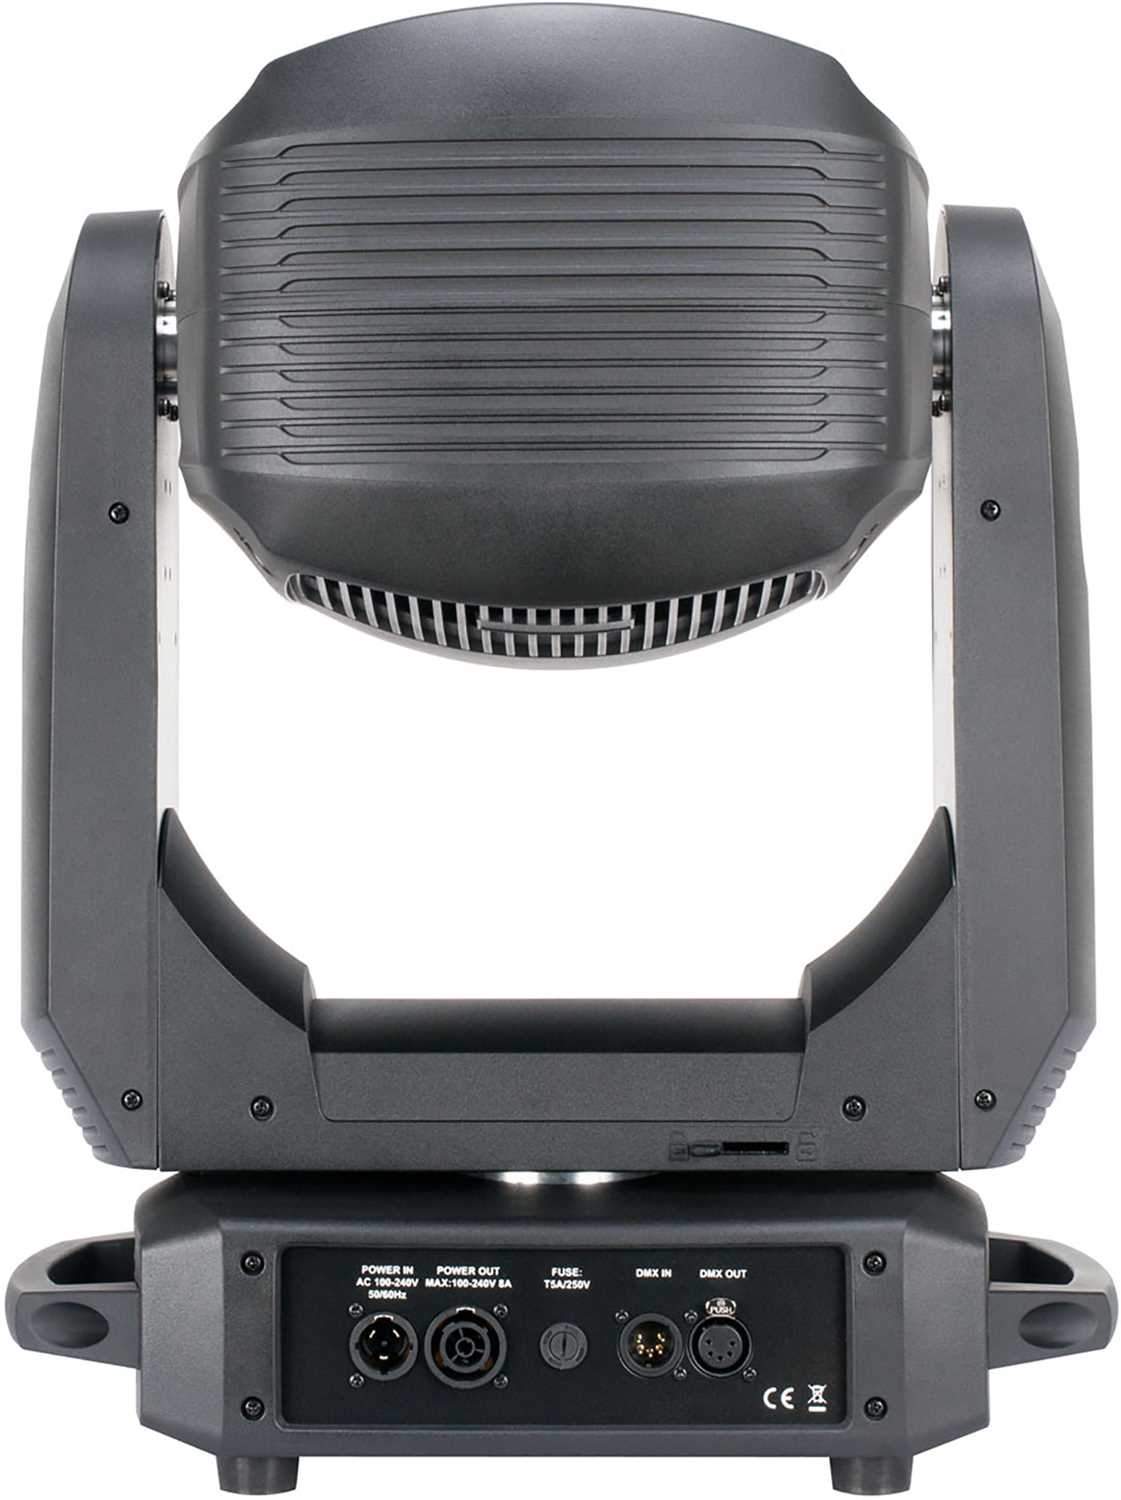 Elation Fuze Spot 305W RGBMA LED Moving Head - ProSound and Stage Lighting